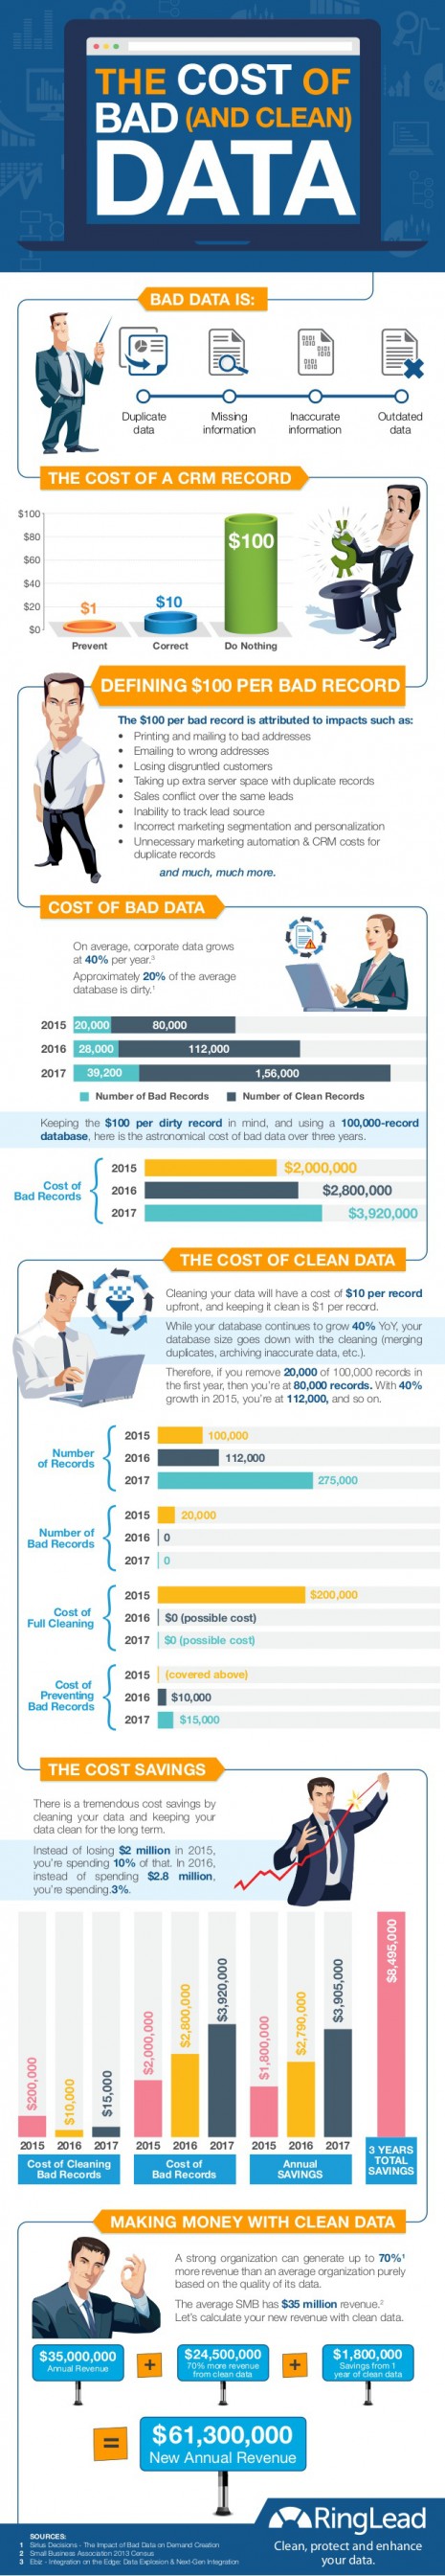 coste-malos-datos-infografia